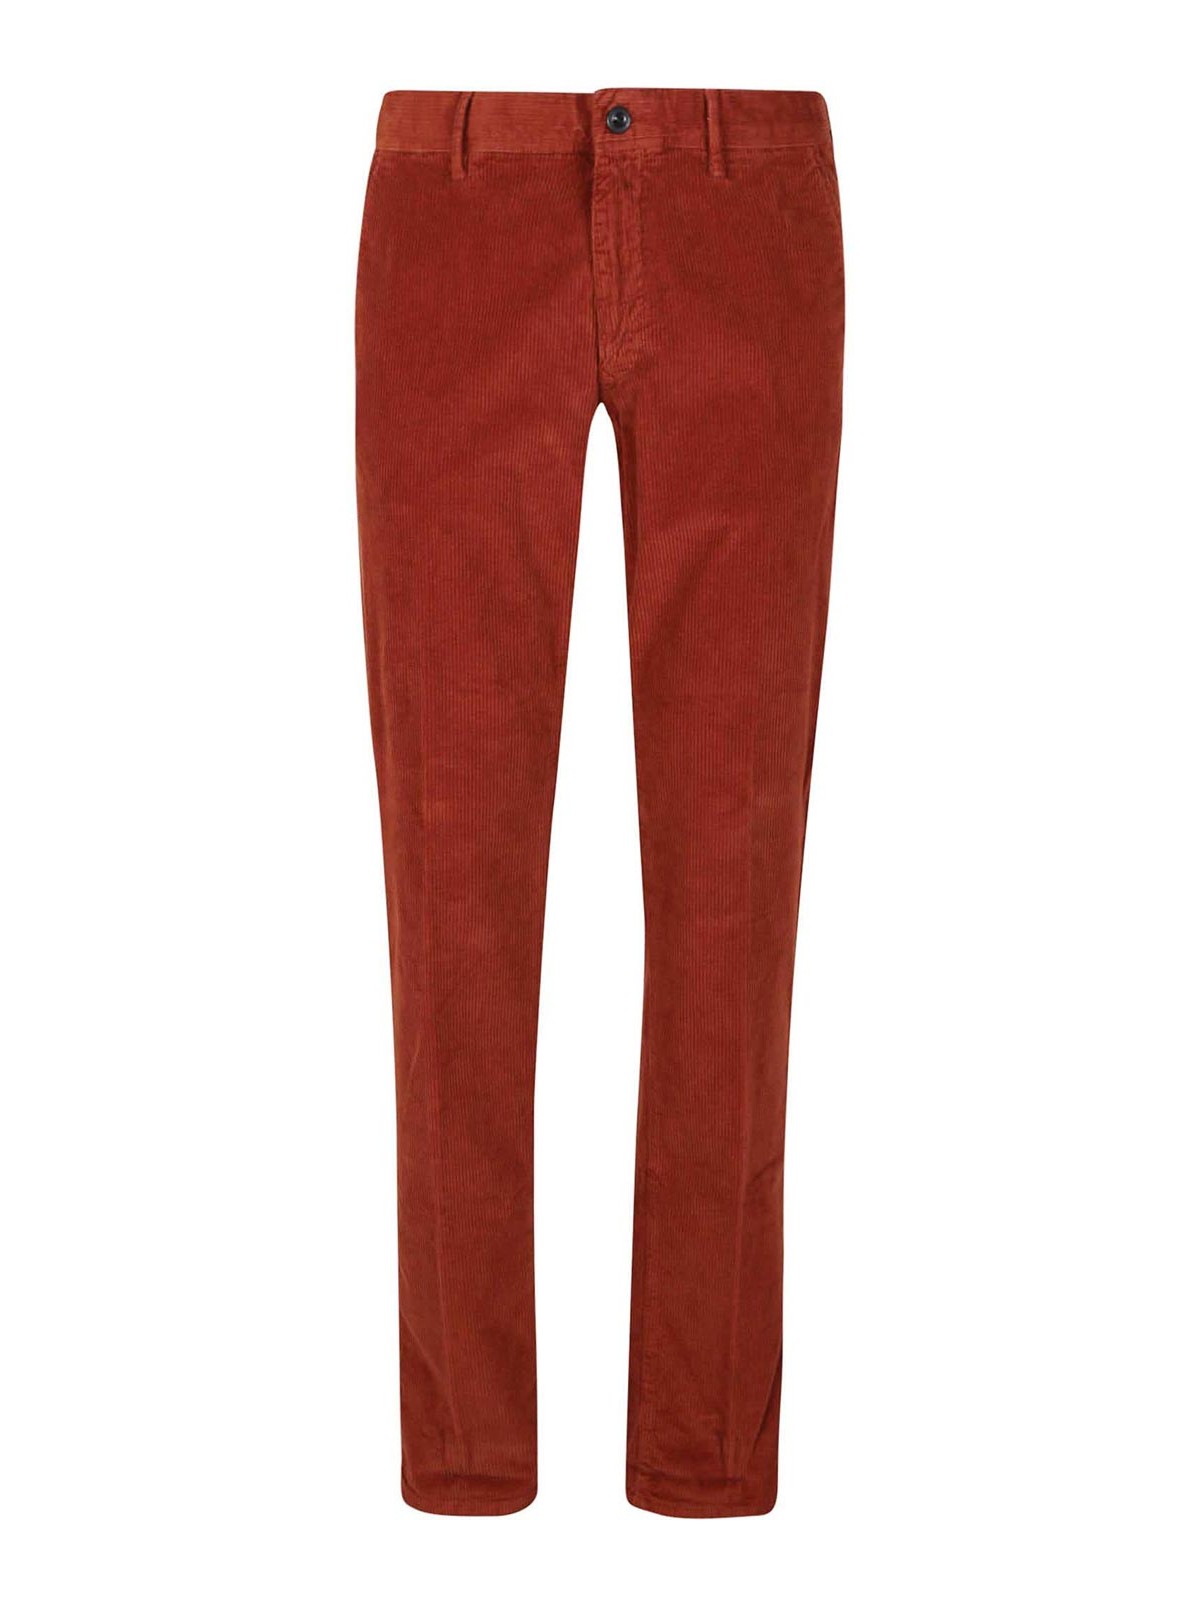 Shop Incotex Shorts - Marrón Oscuro In Dark Red